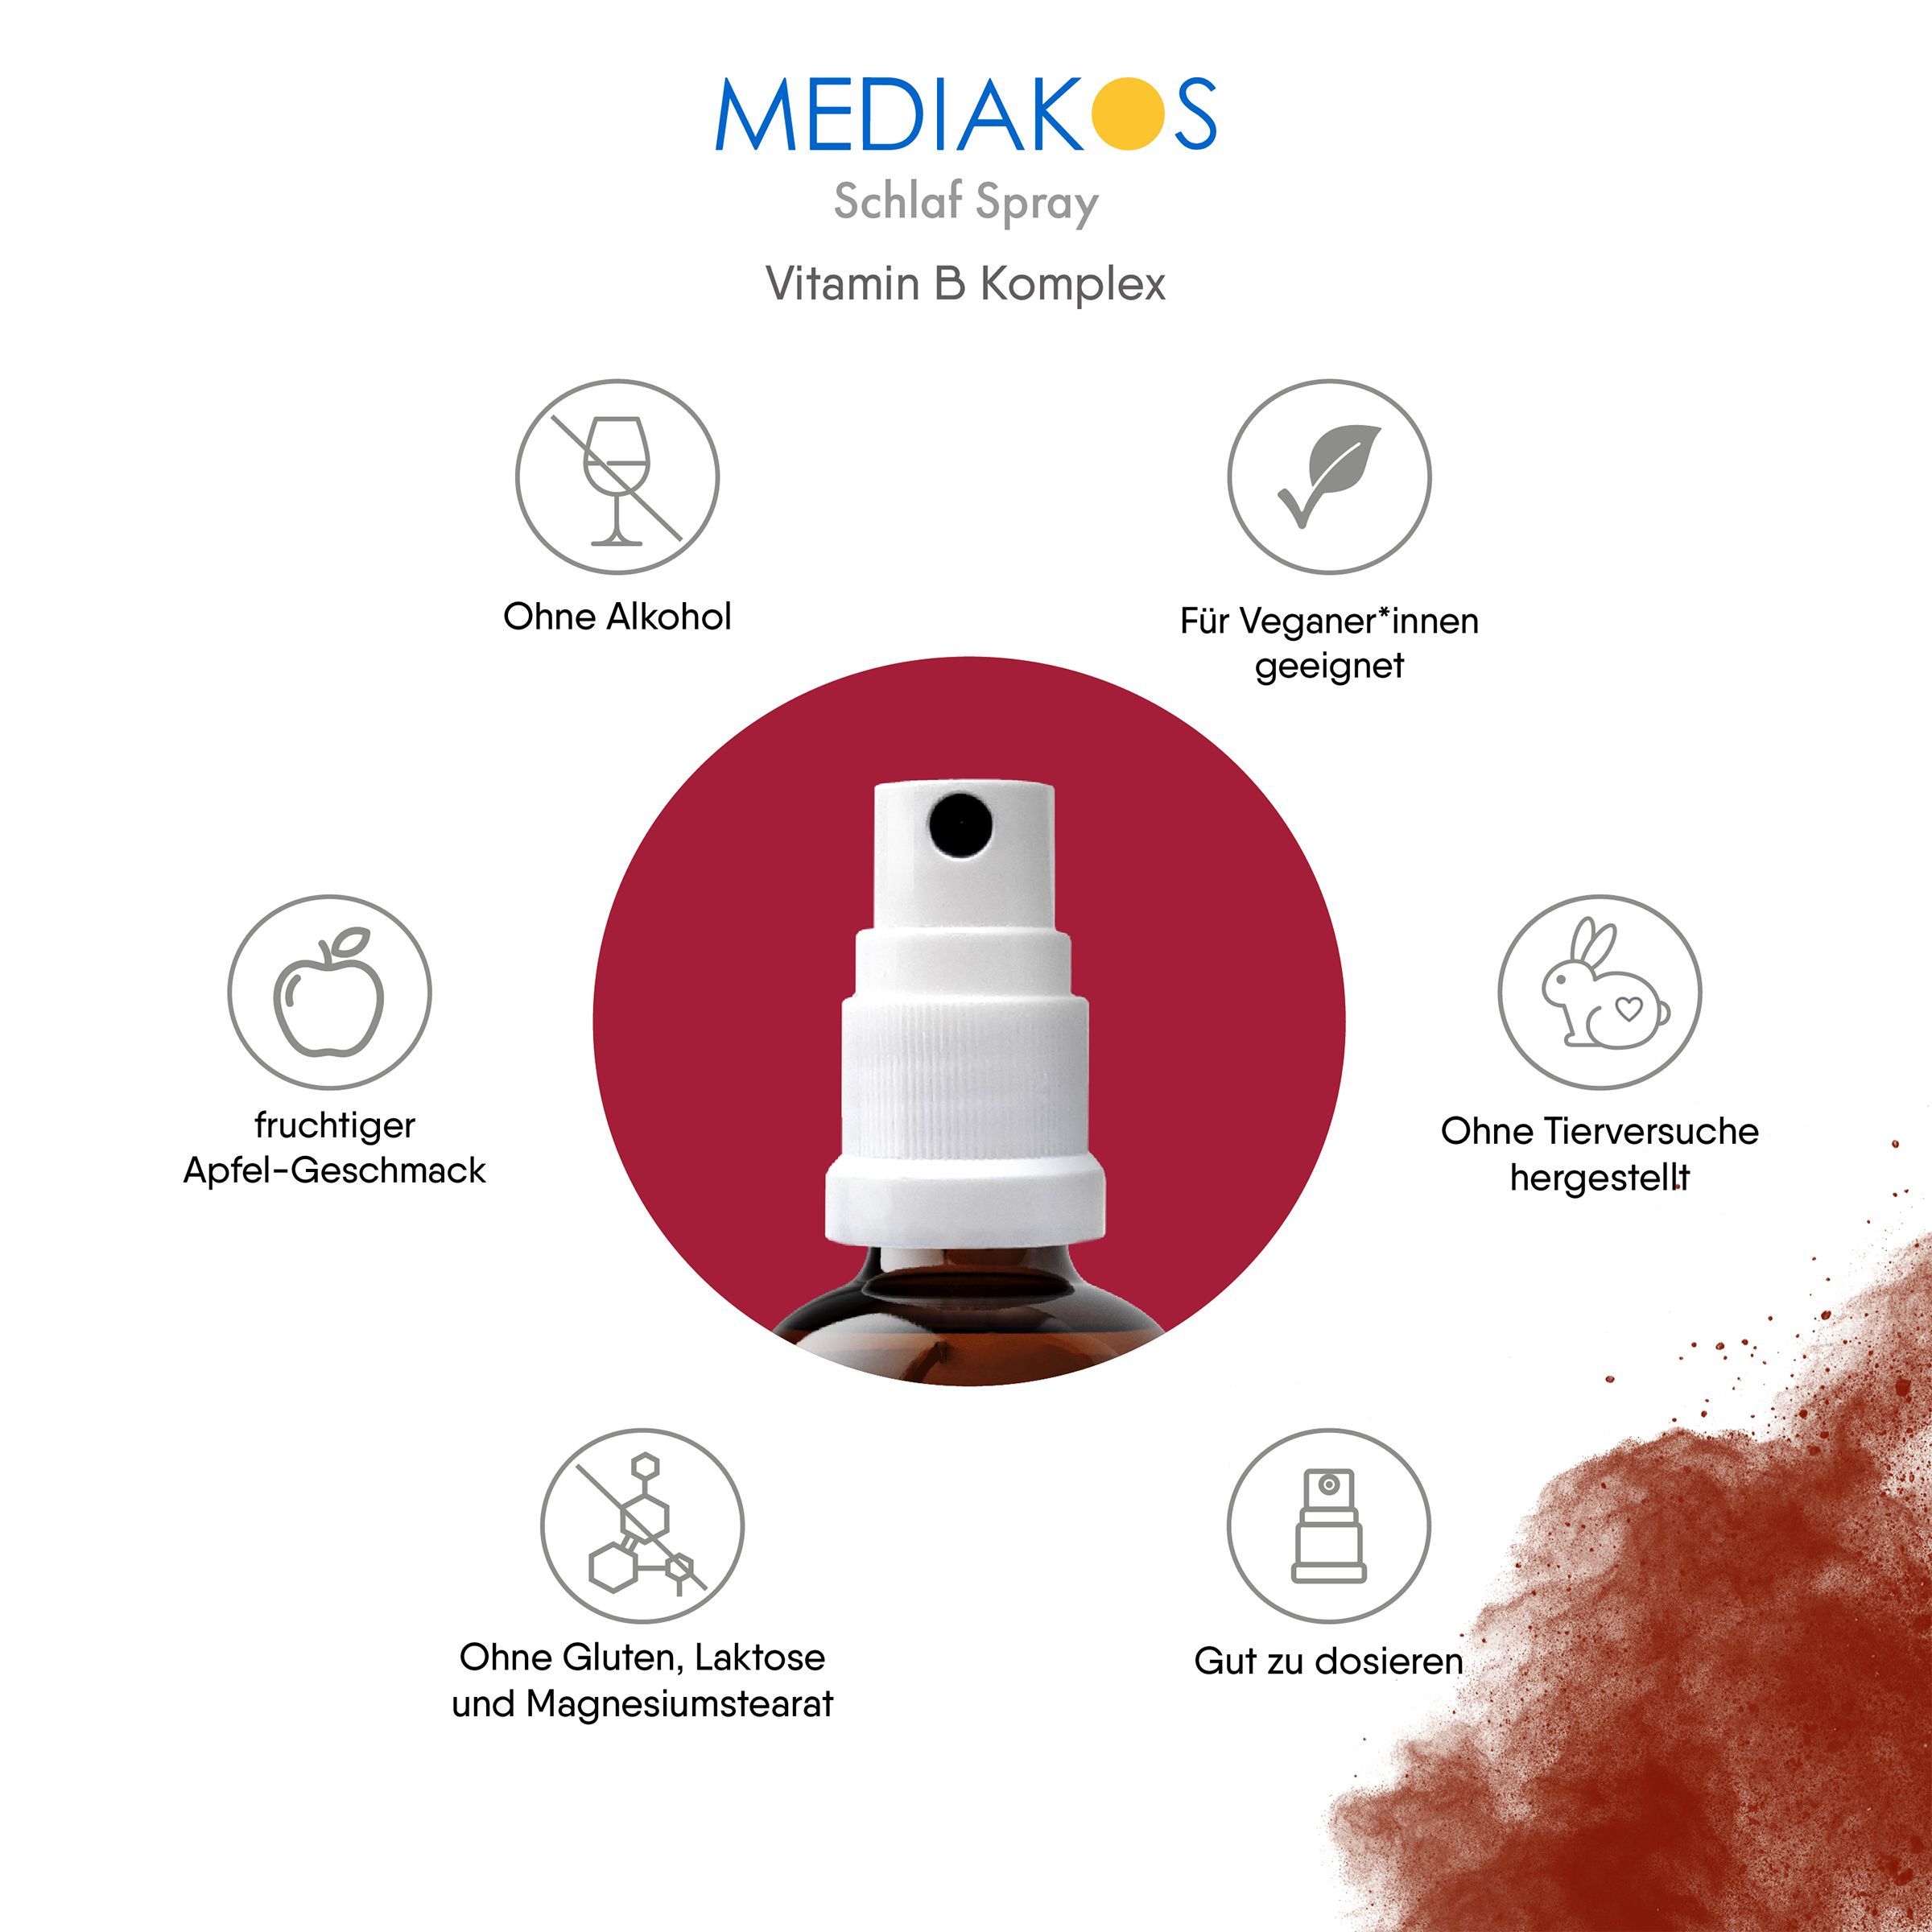 Mediakos® Vitamin B Komplex Vital Spray